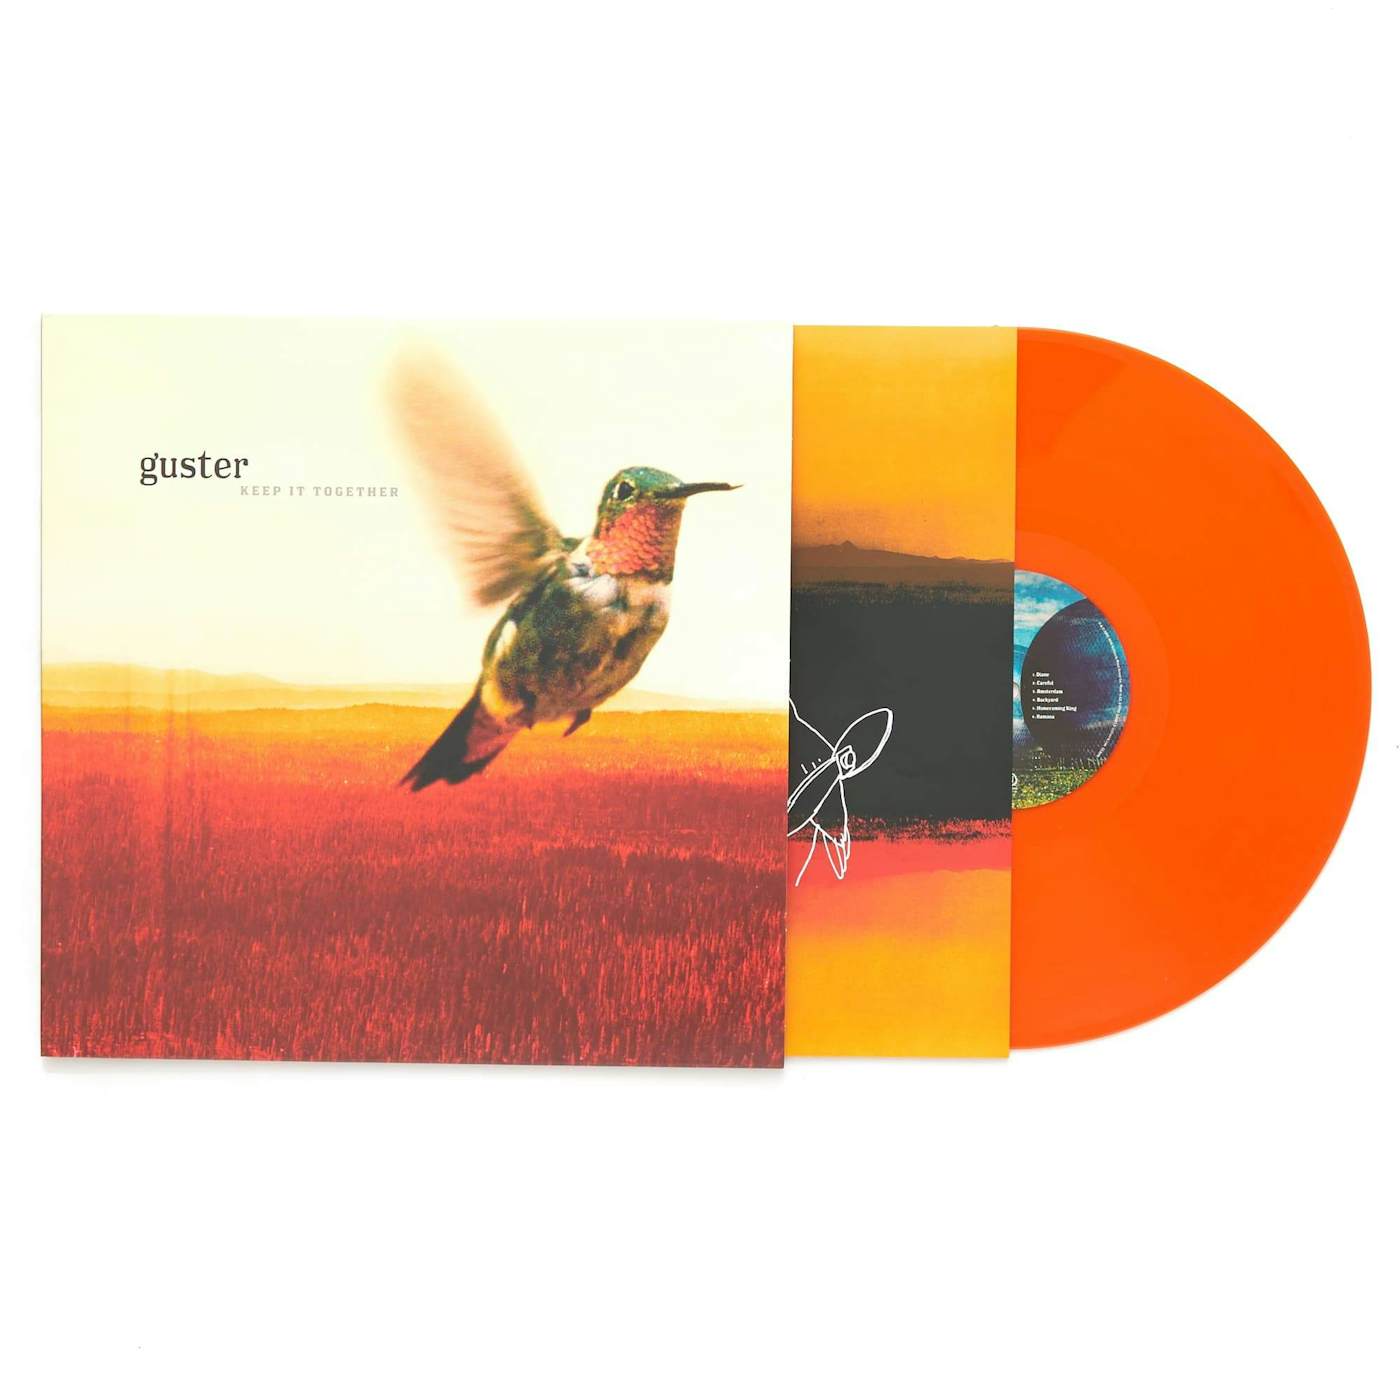 Guster 'Keep It Together' 12" Vinyl LP - Translucent Orange Crush